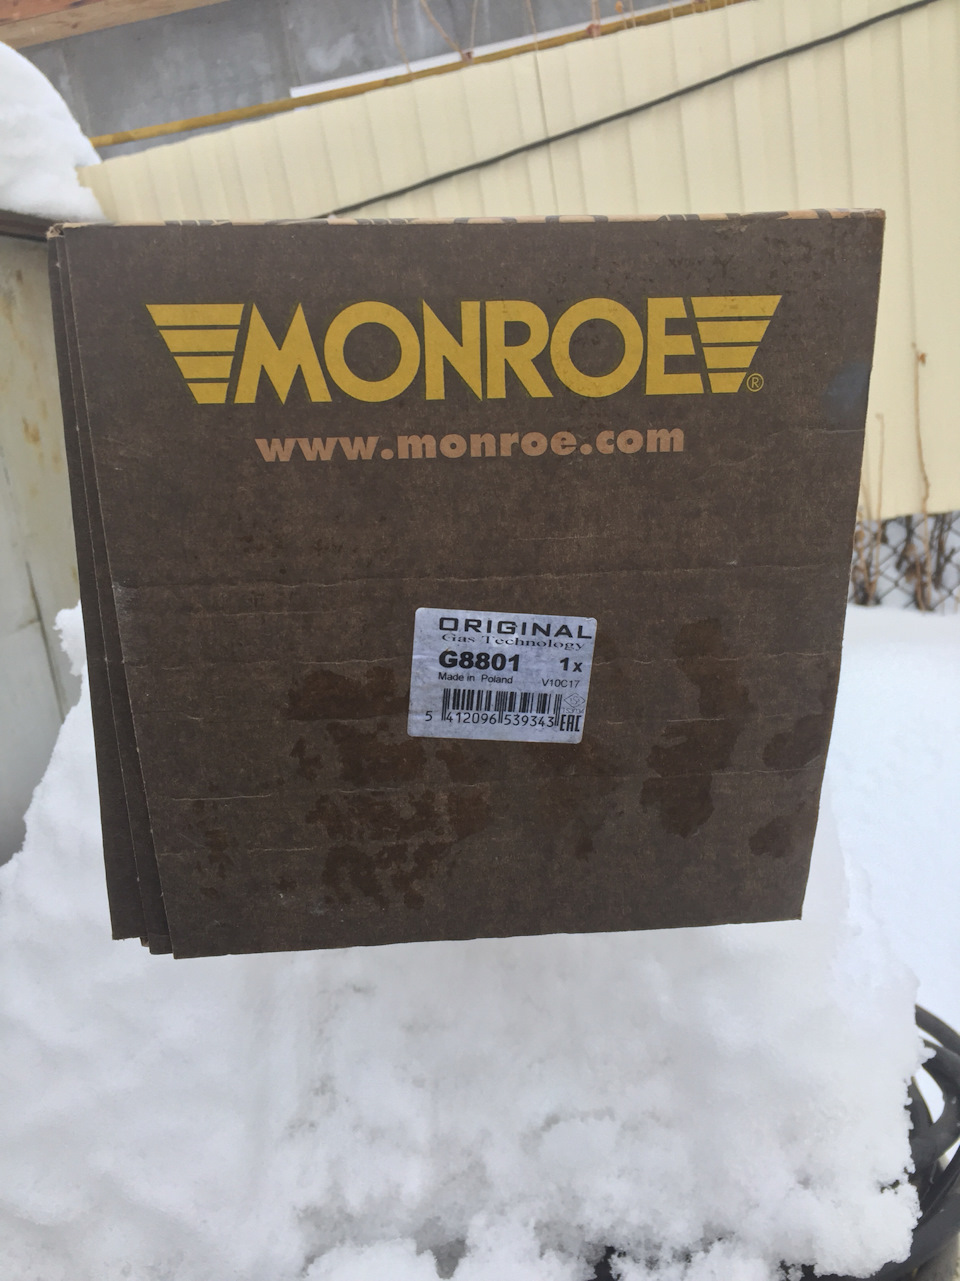 Стойки монро отзывы. G8801 Monroe. Коробка стойки Monroe фото g 8803.